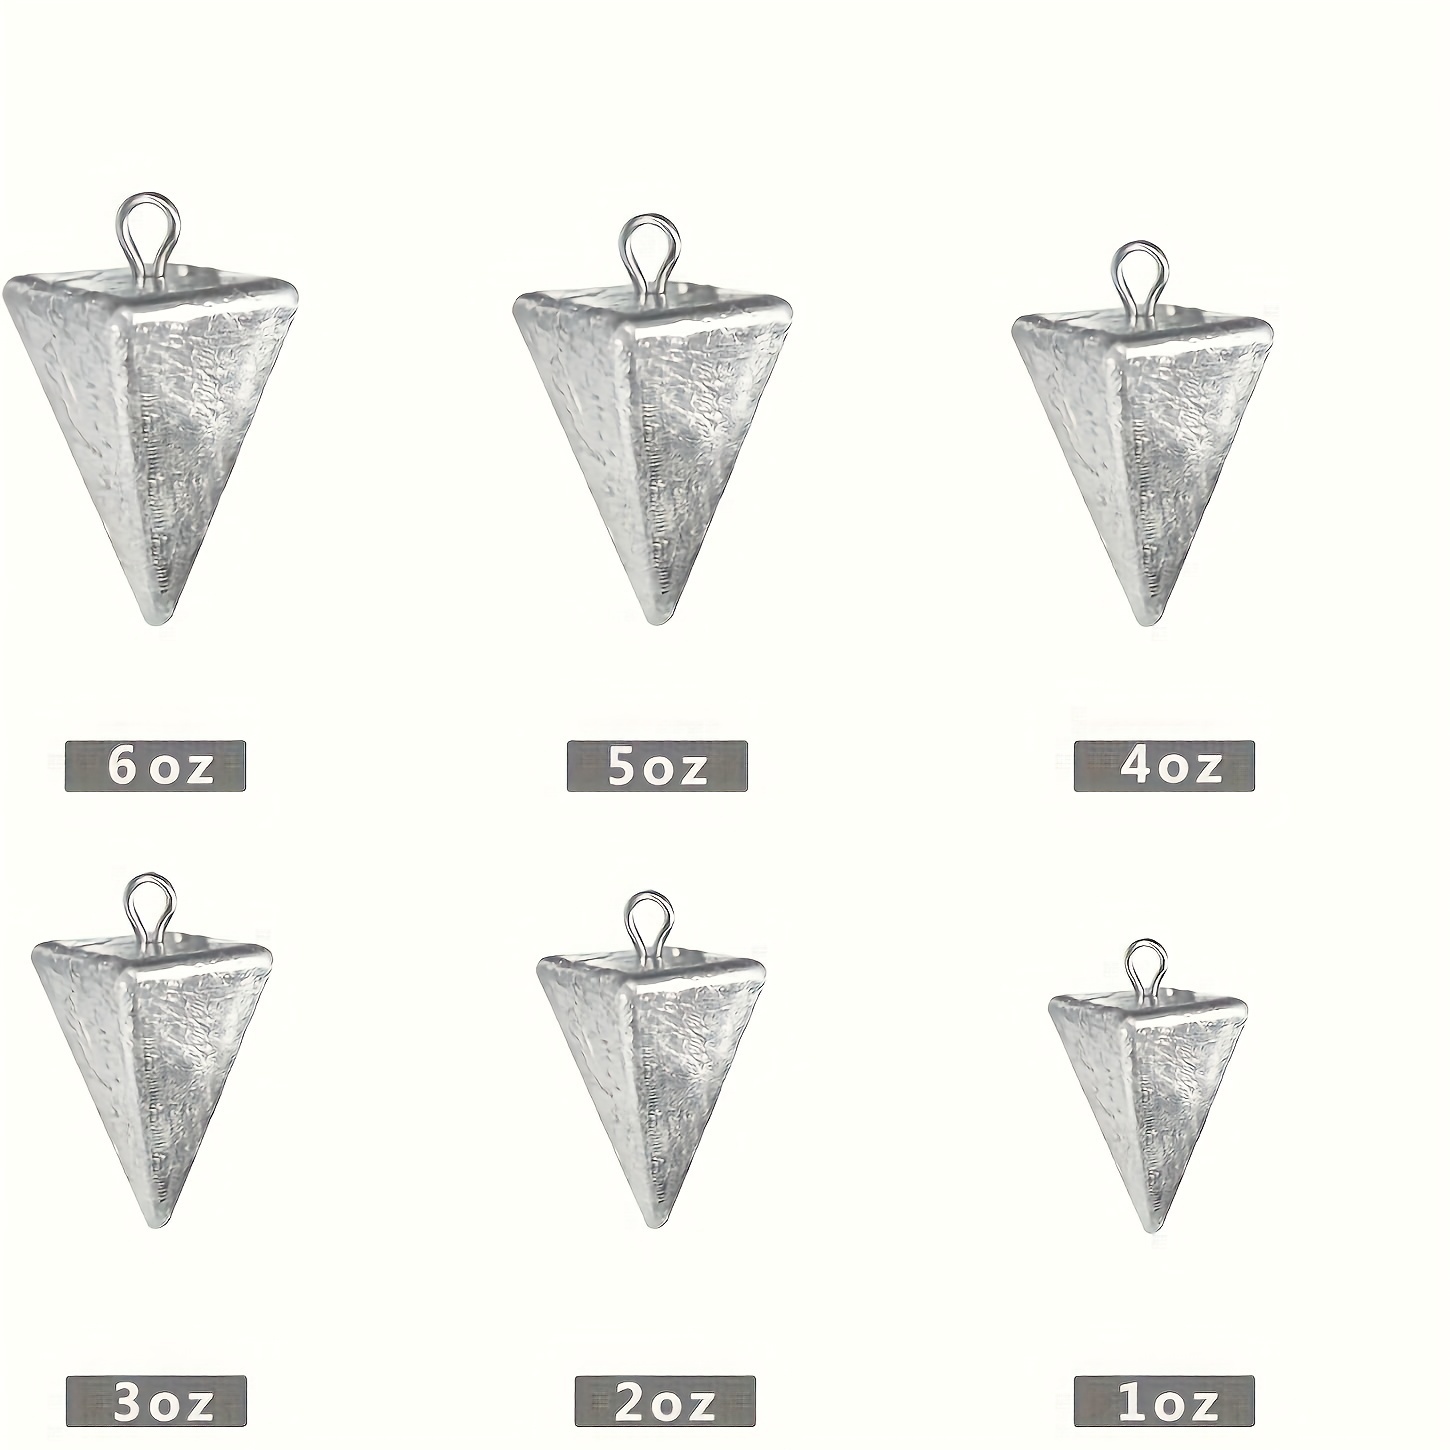 Pyramid Fishing Weights 3oz/5oz/8oz/10oz/12oz/16oz/32oz